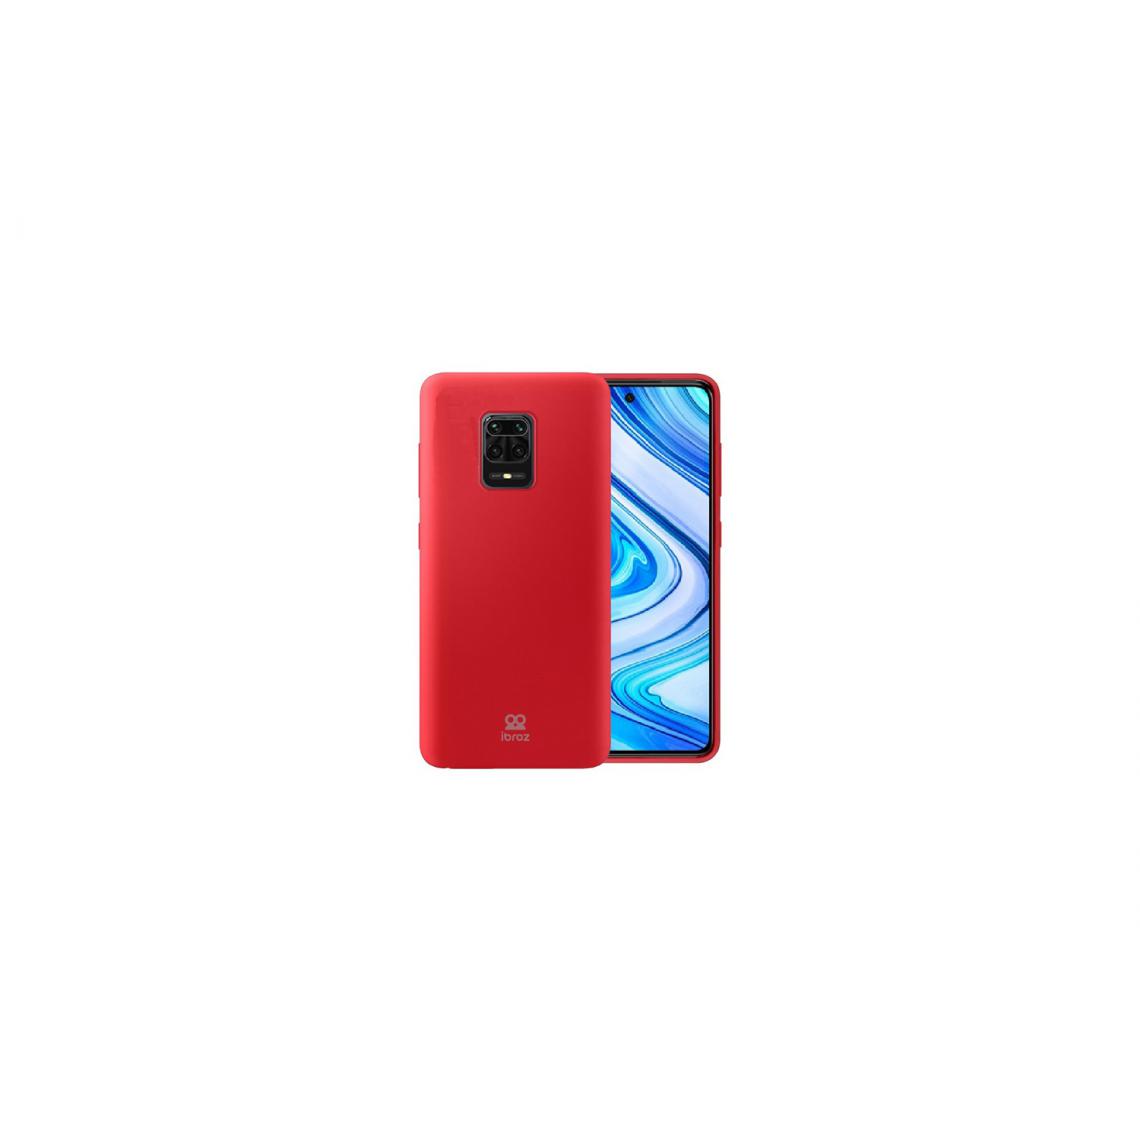 Ibroz - Ibroz Coque en silicone rouge pour - Coque, étui smartphone